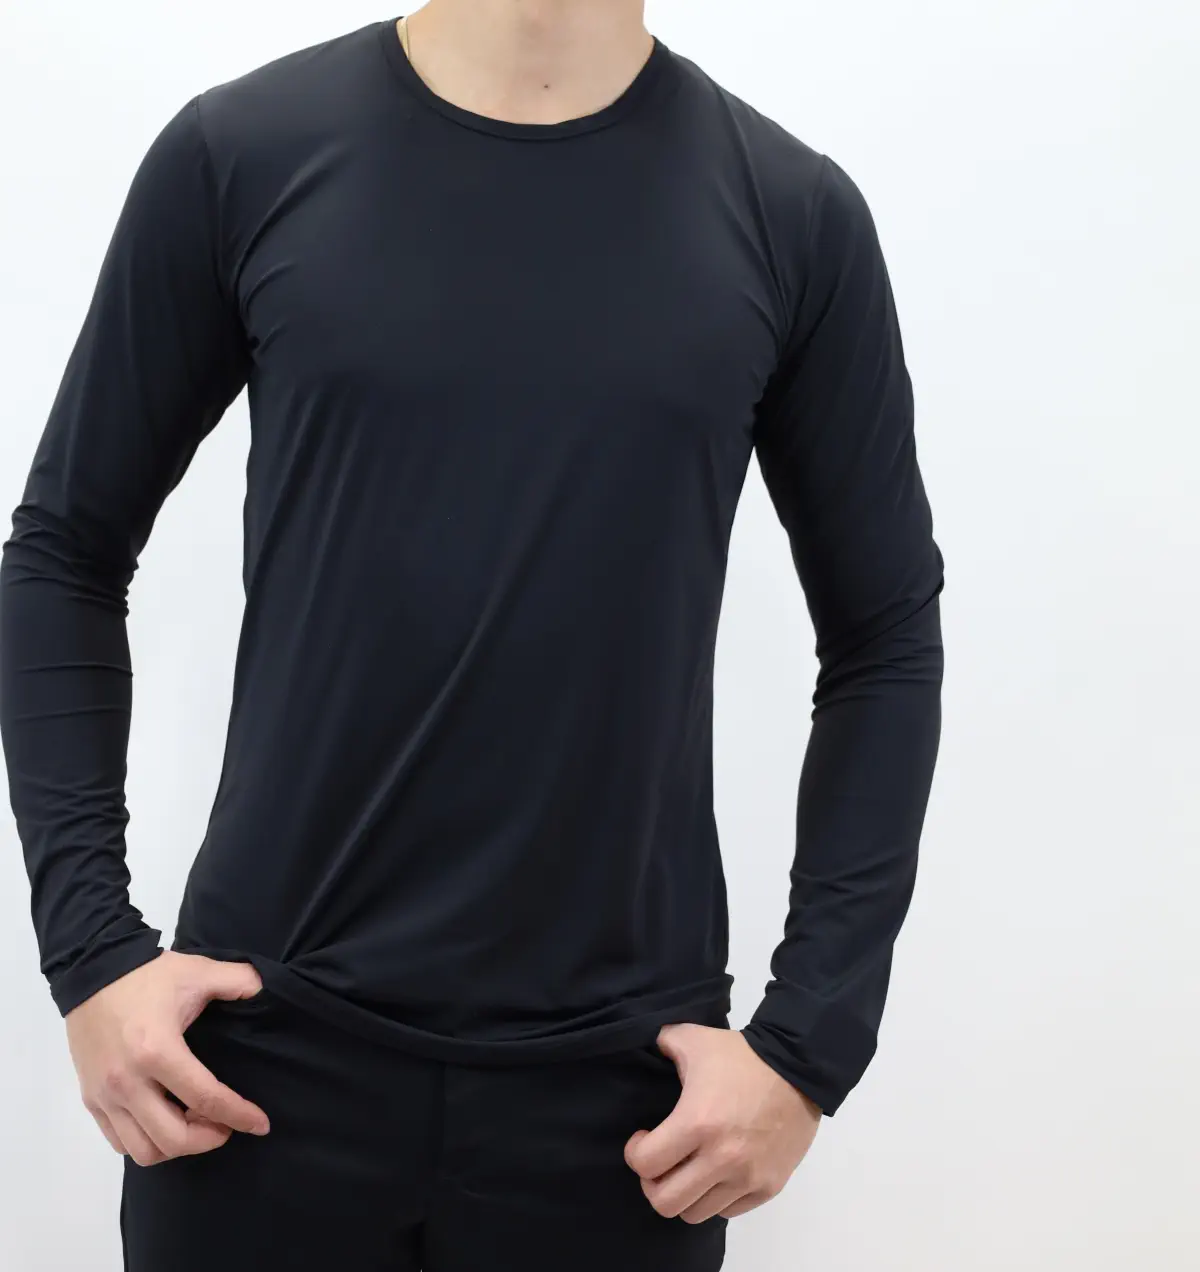 Kismet Men's Training Shirt Long Sleeve Todd UV Protection Black Extra-Large by TackNRider